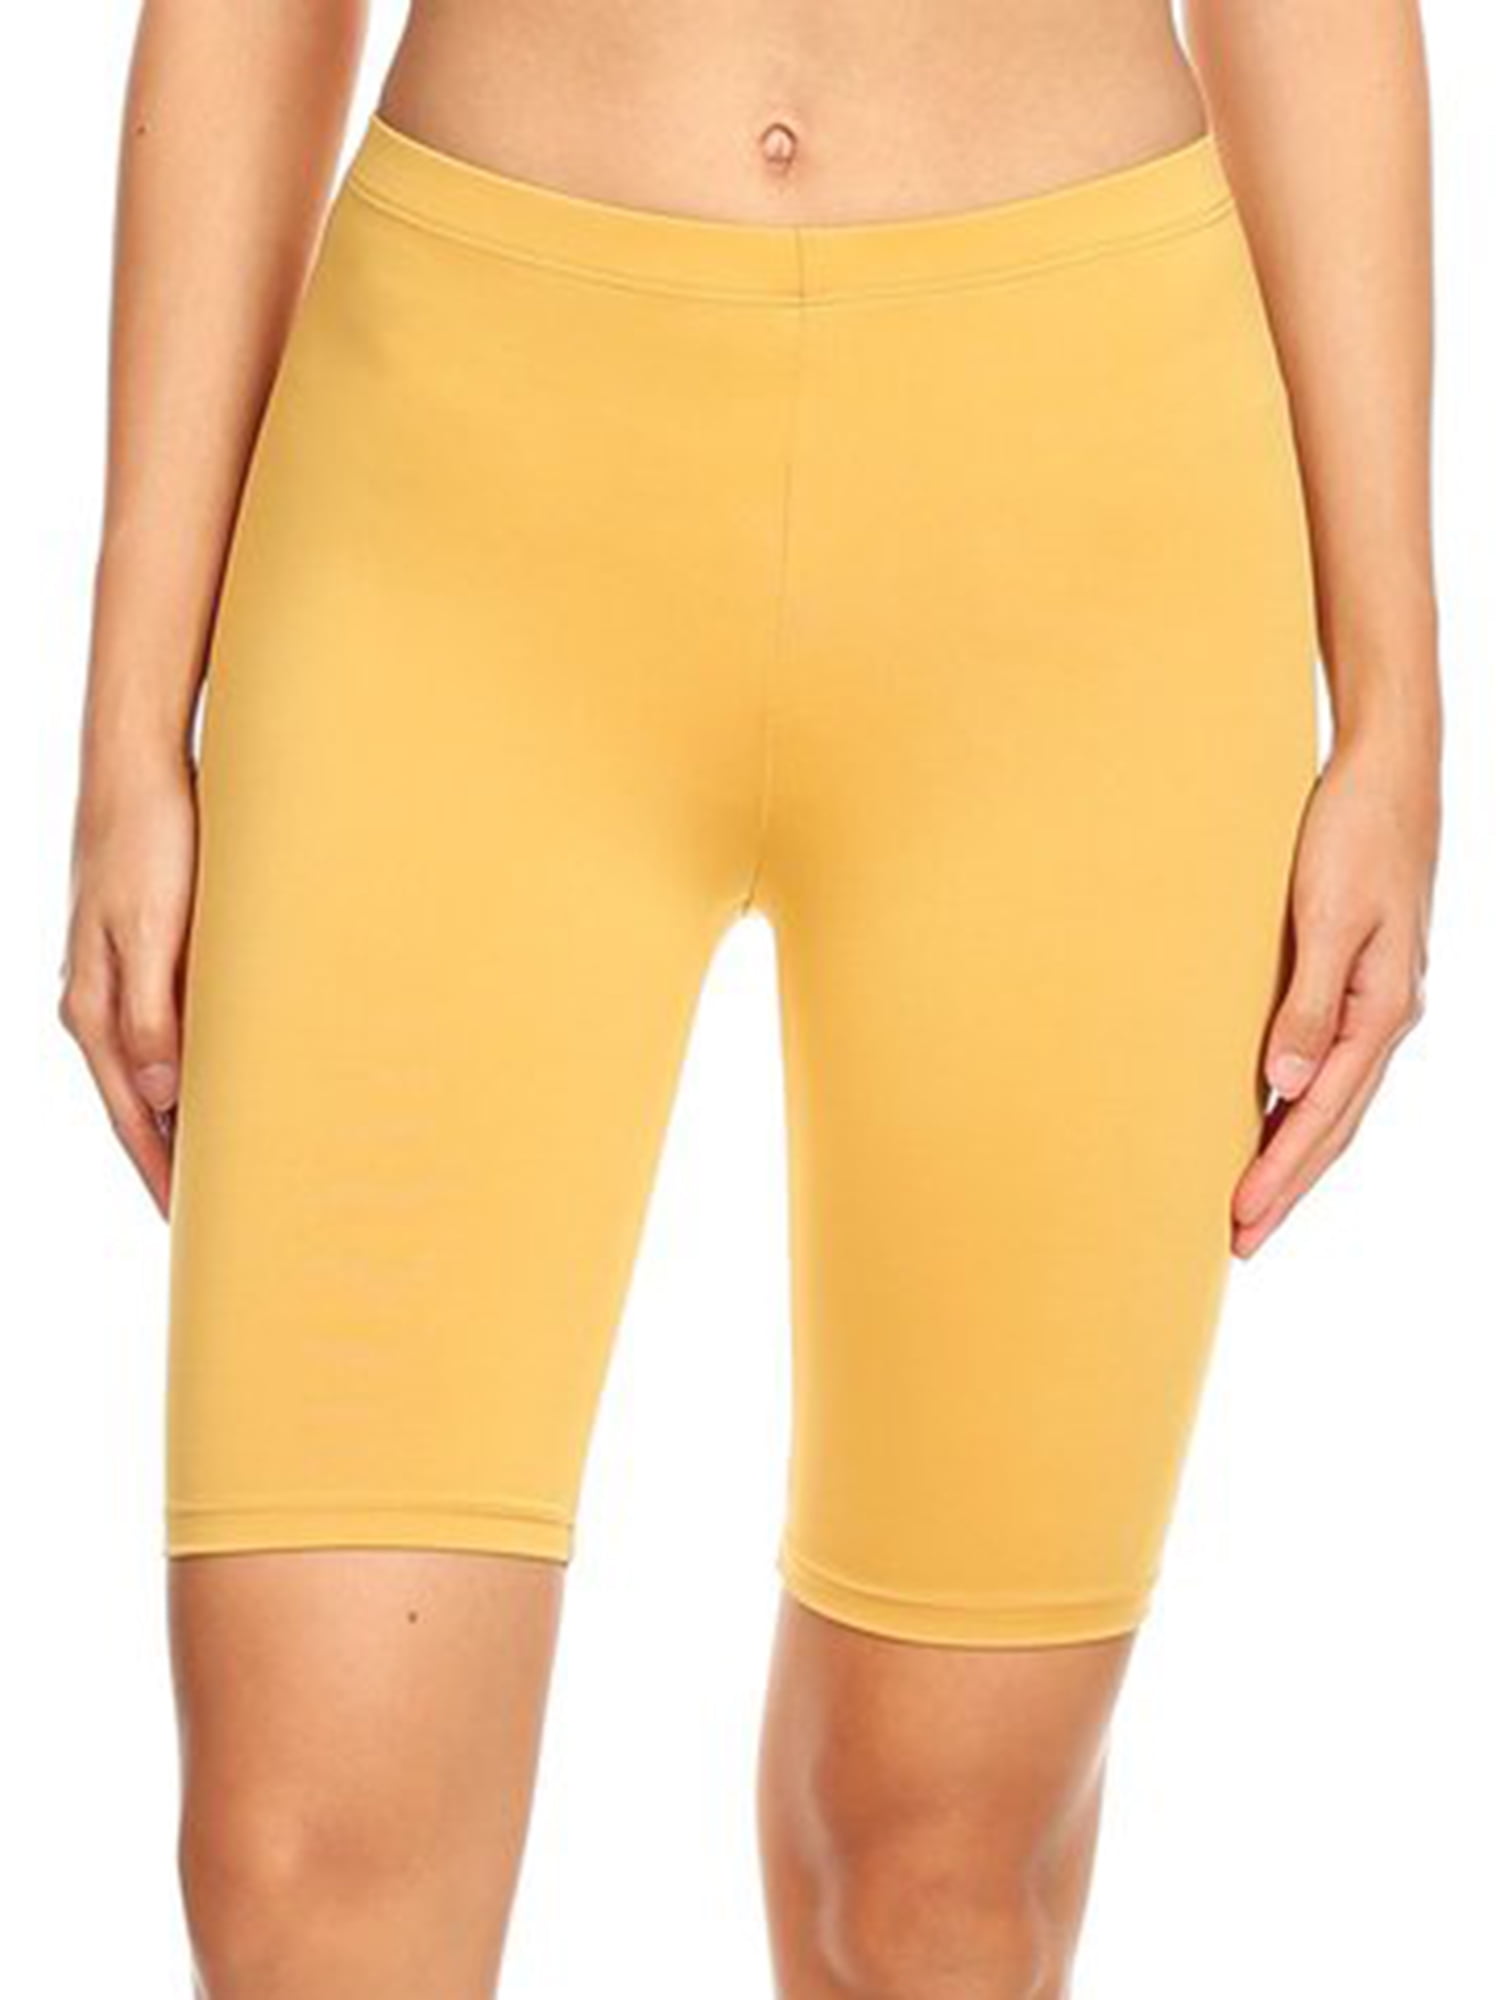 Imagenation Plain Soild Biker Shorts, Large, Mustard - Walmart.com